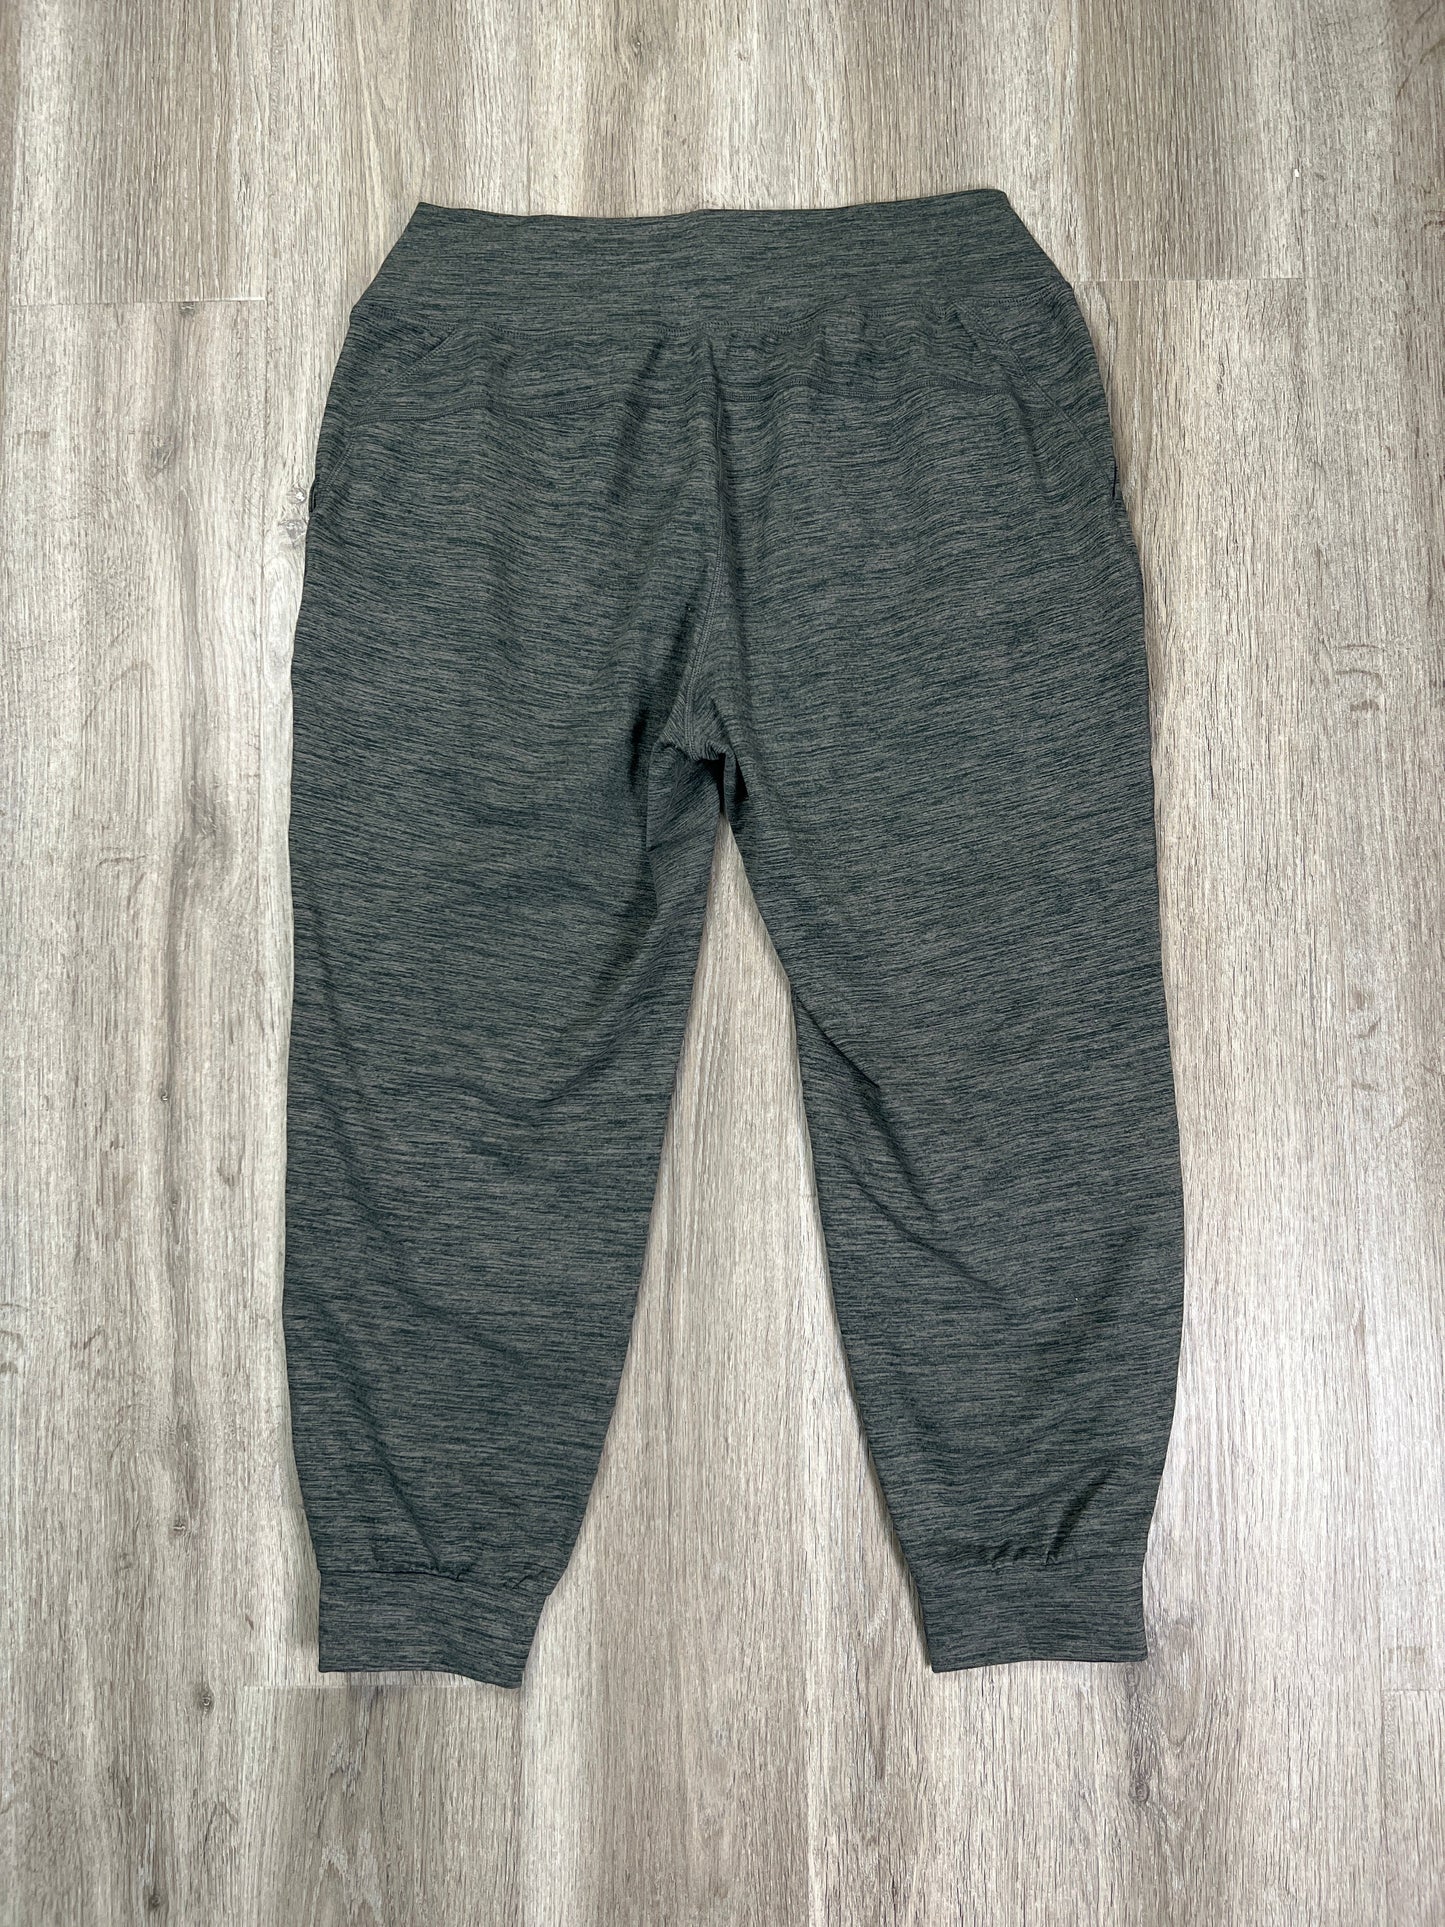 Athletic Pants By Joy Lab  Size: Xl